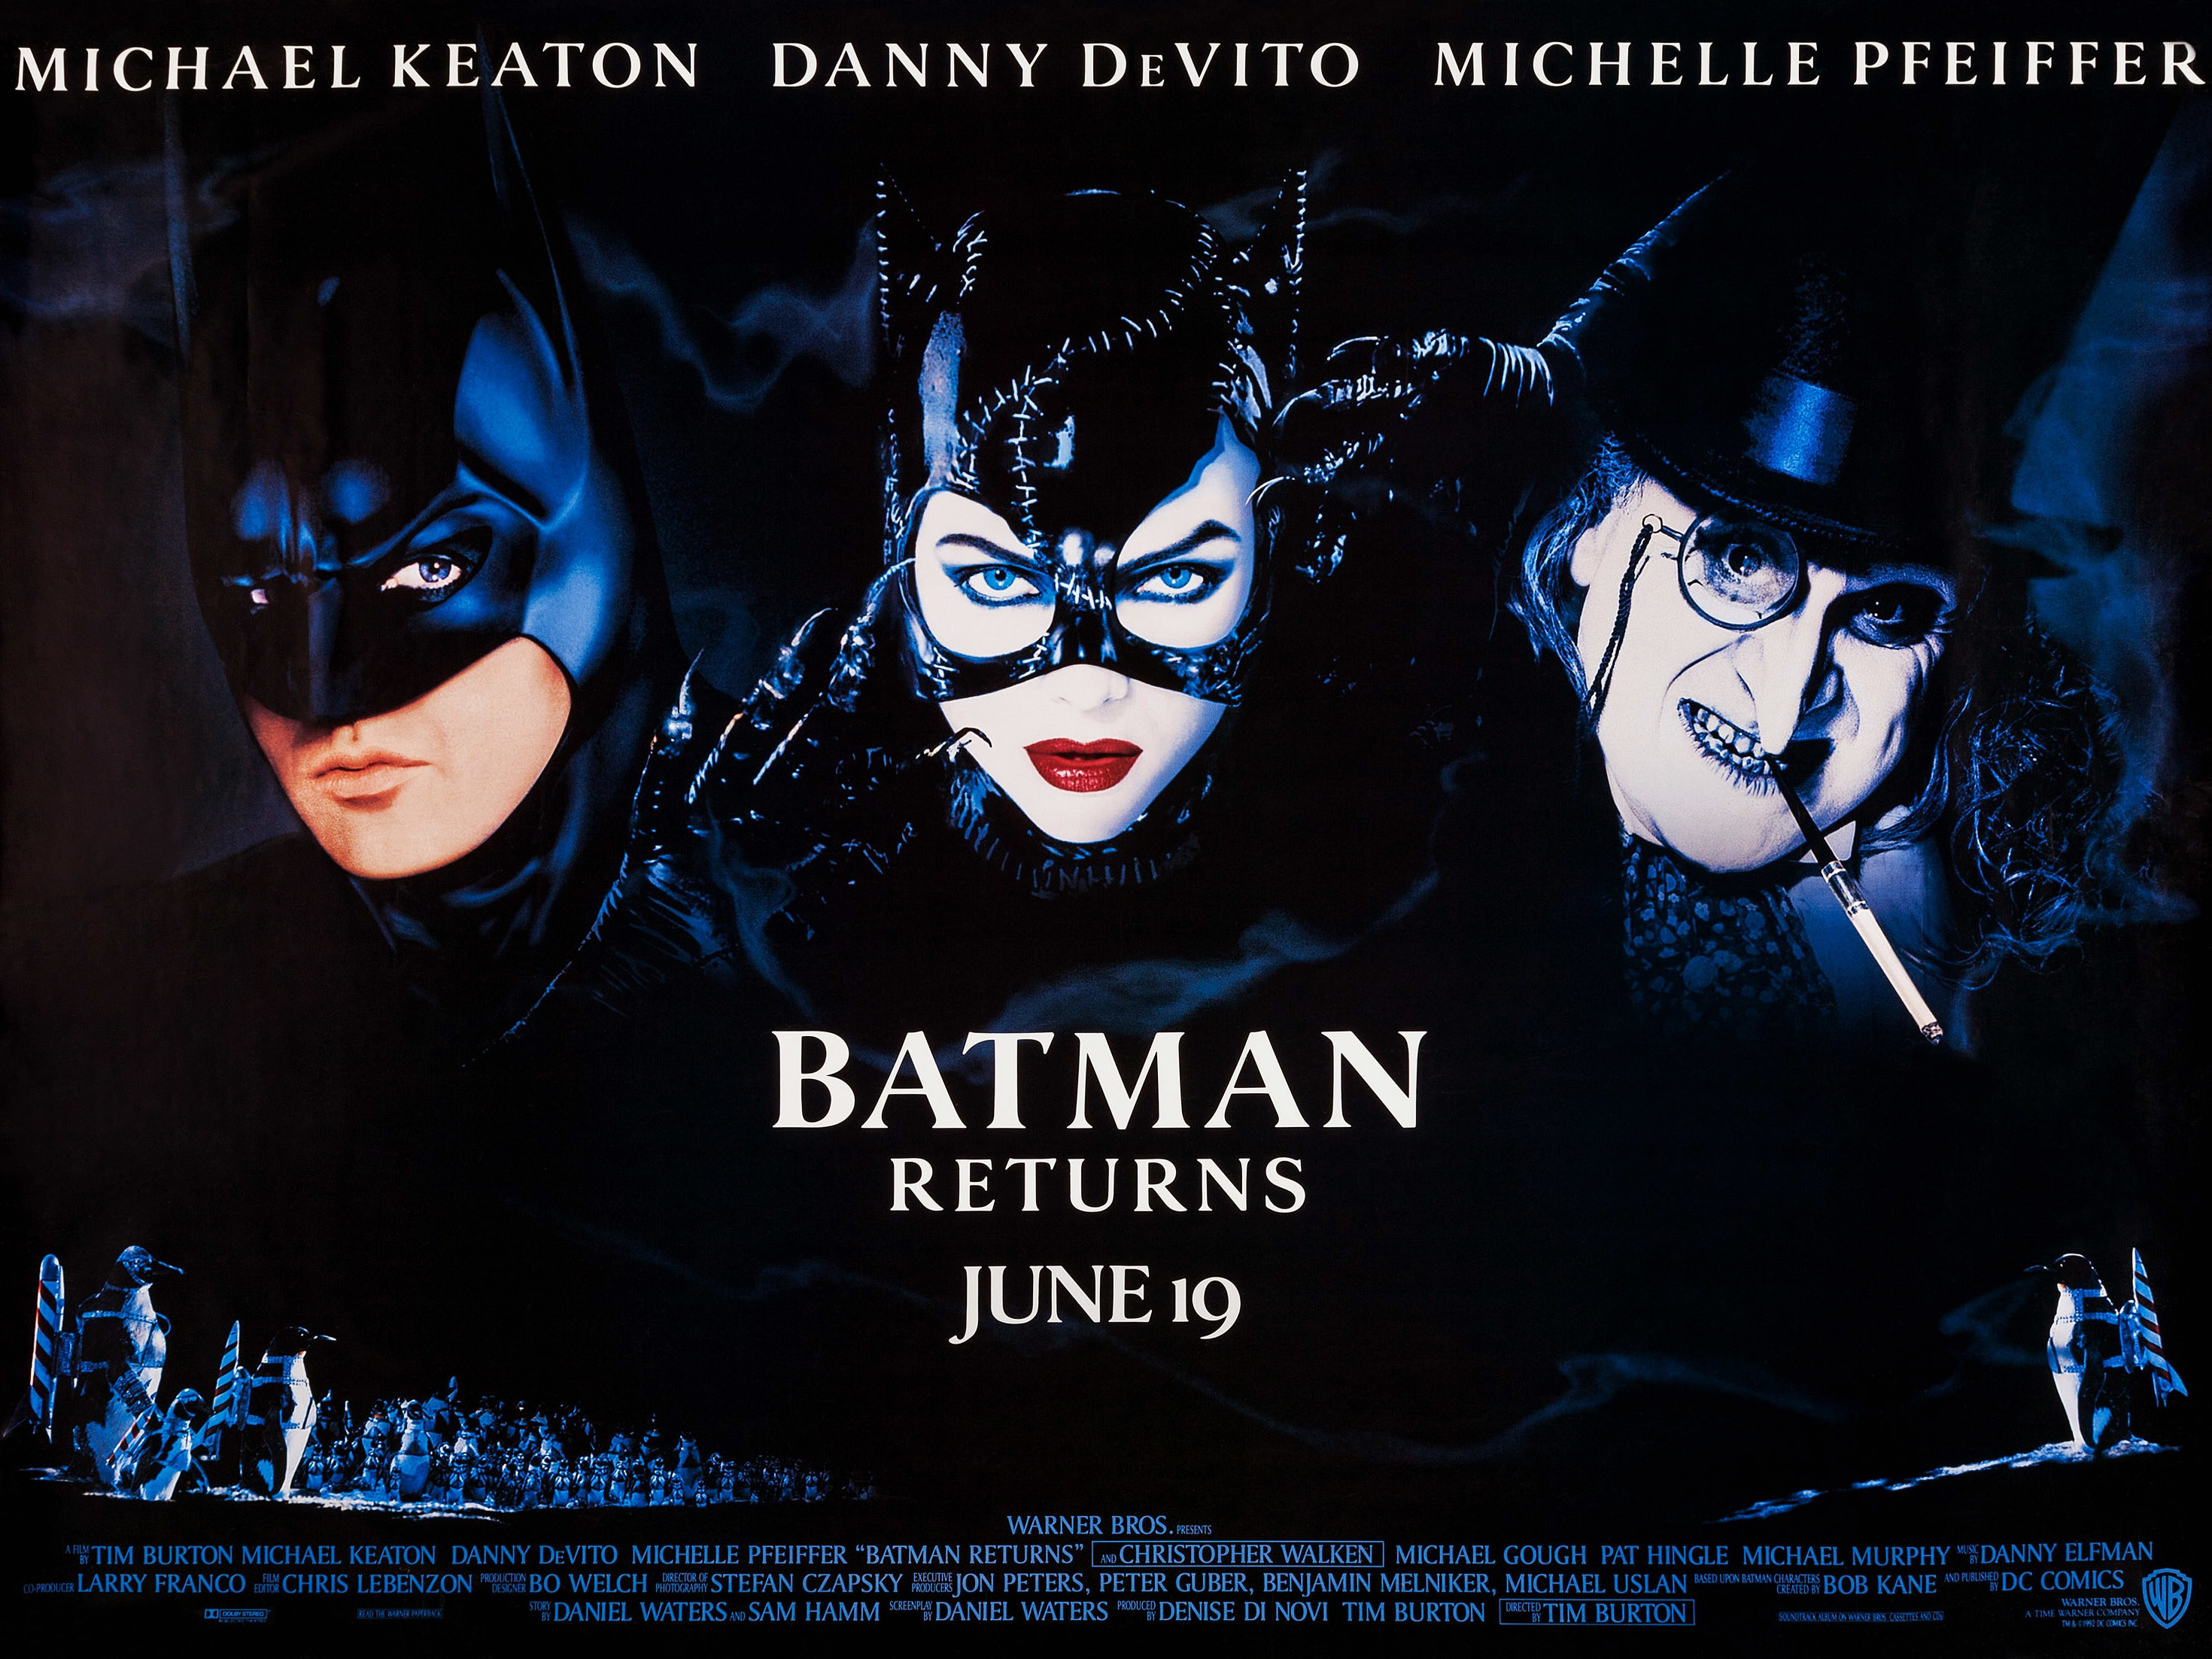 Batman Returns movie poster featuring Batman, Catwoman, and the Penguin